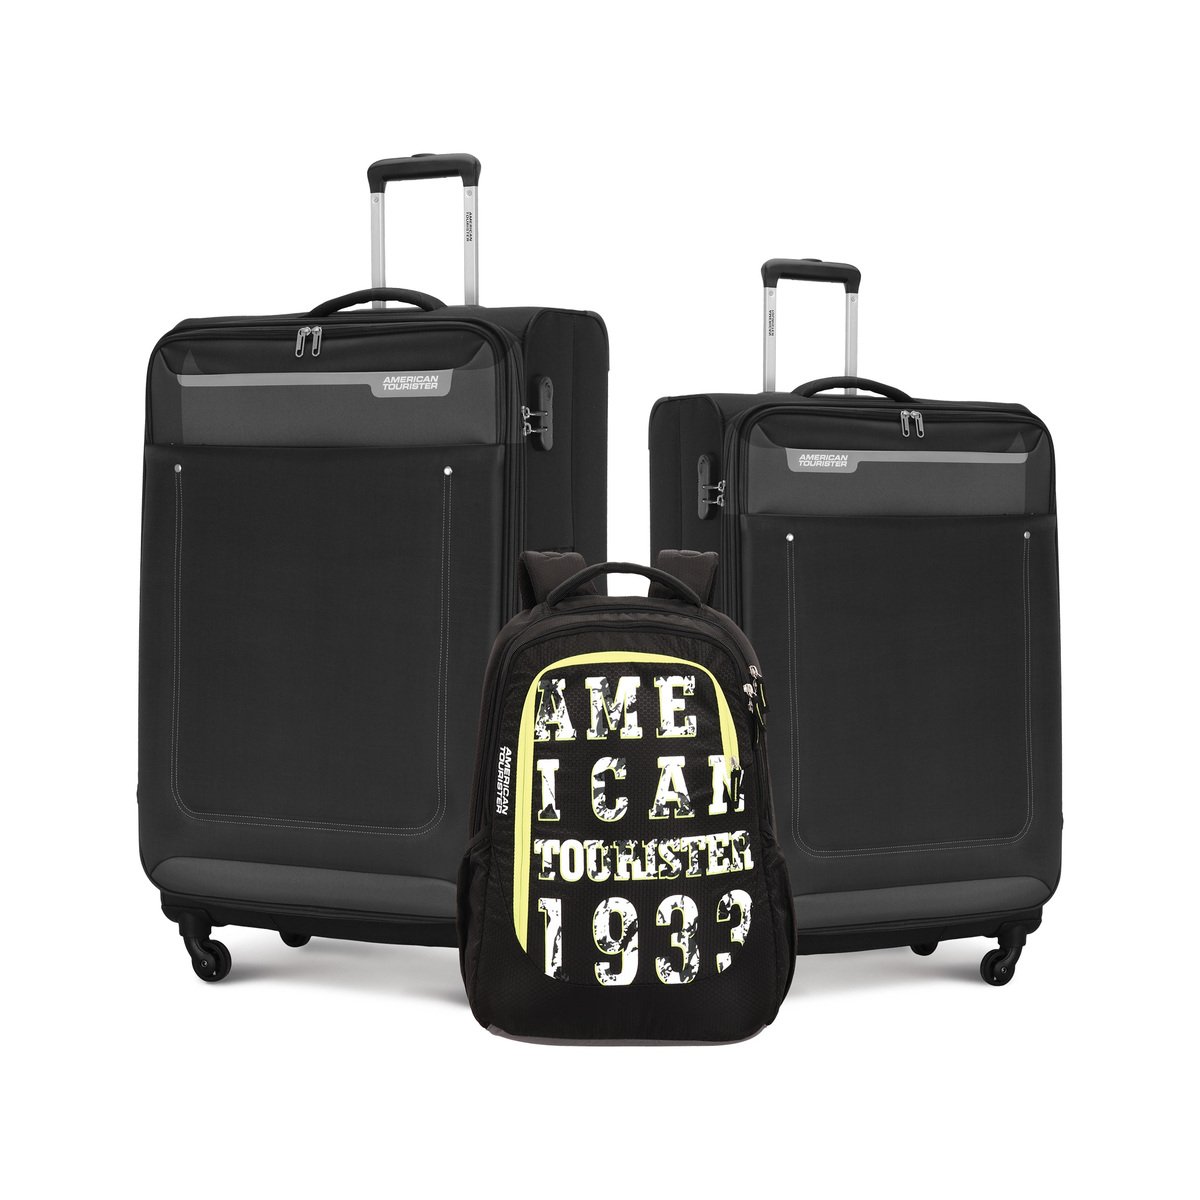 AmericanTourister Jackson 4wheel Soft Trolley 2 Pieces Set (70cm+80cm) Black Color + Backpack